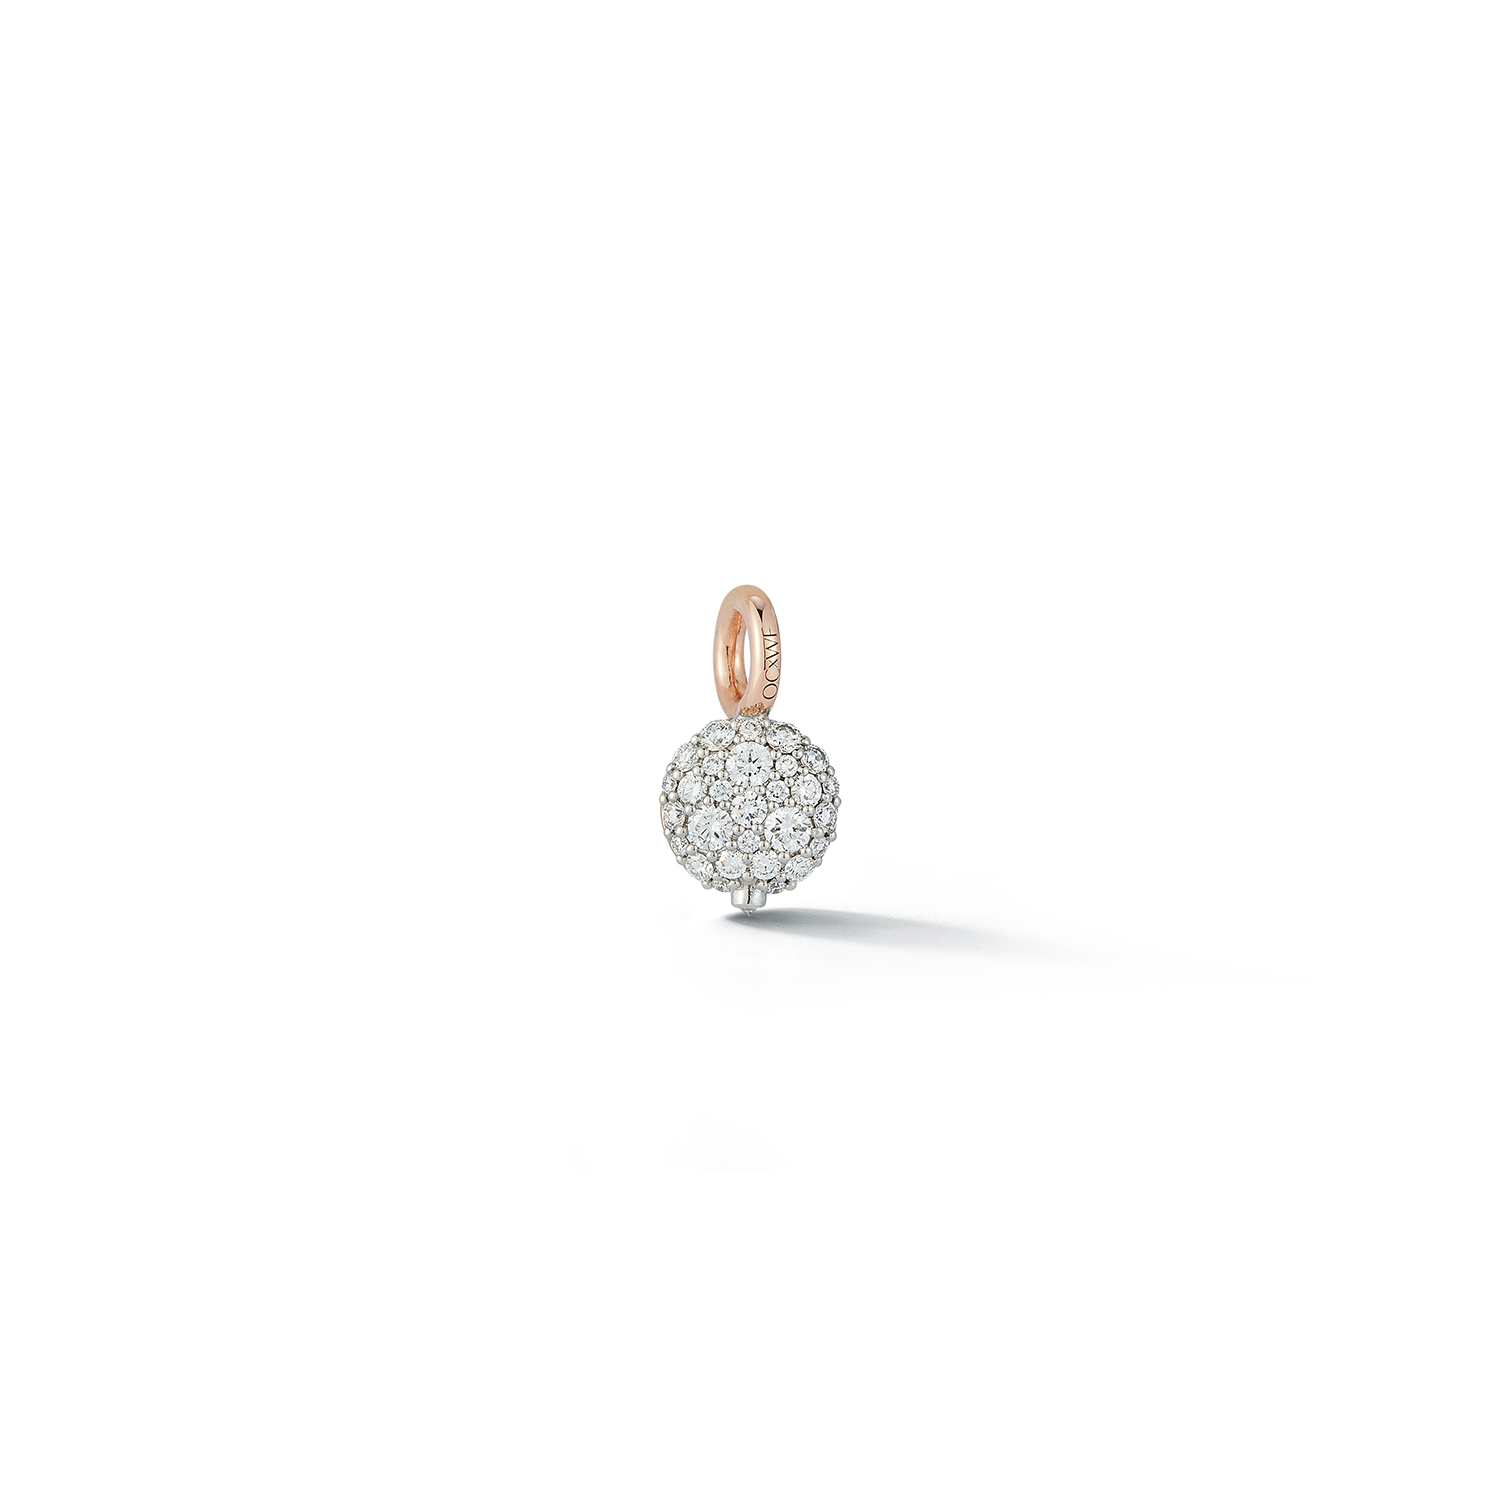 Walter's Faith 18kt White Gold Small Diamond Pebble Locket